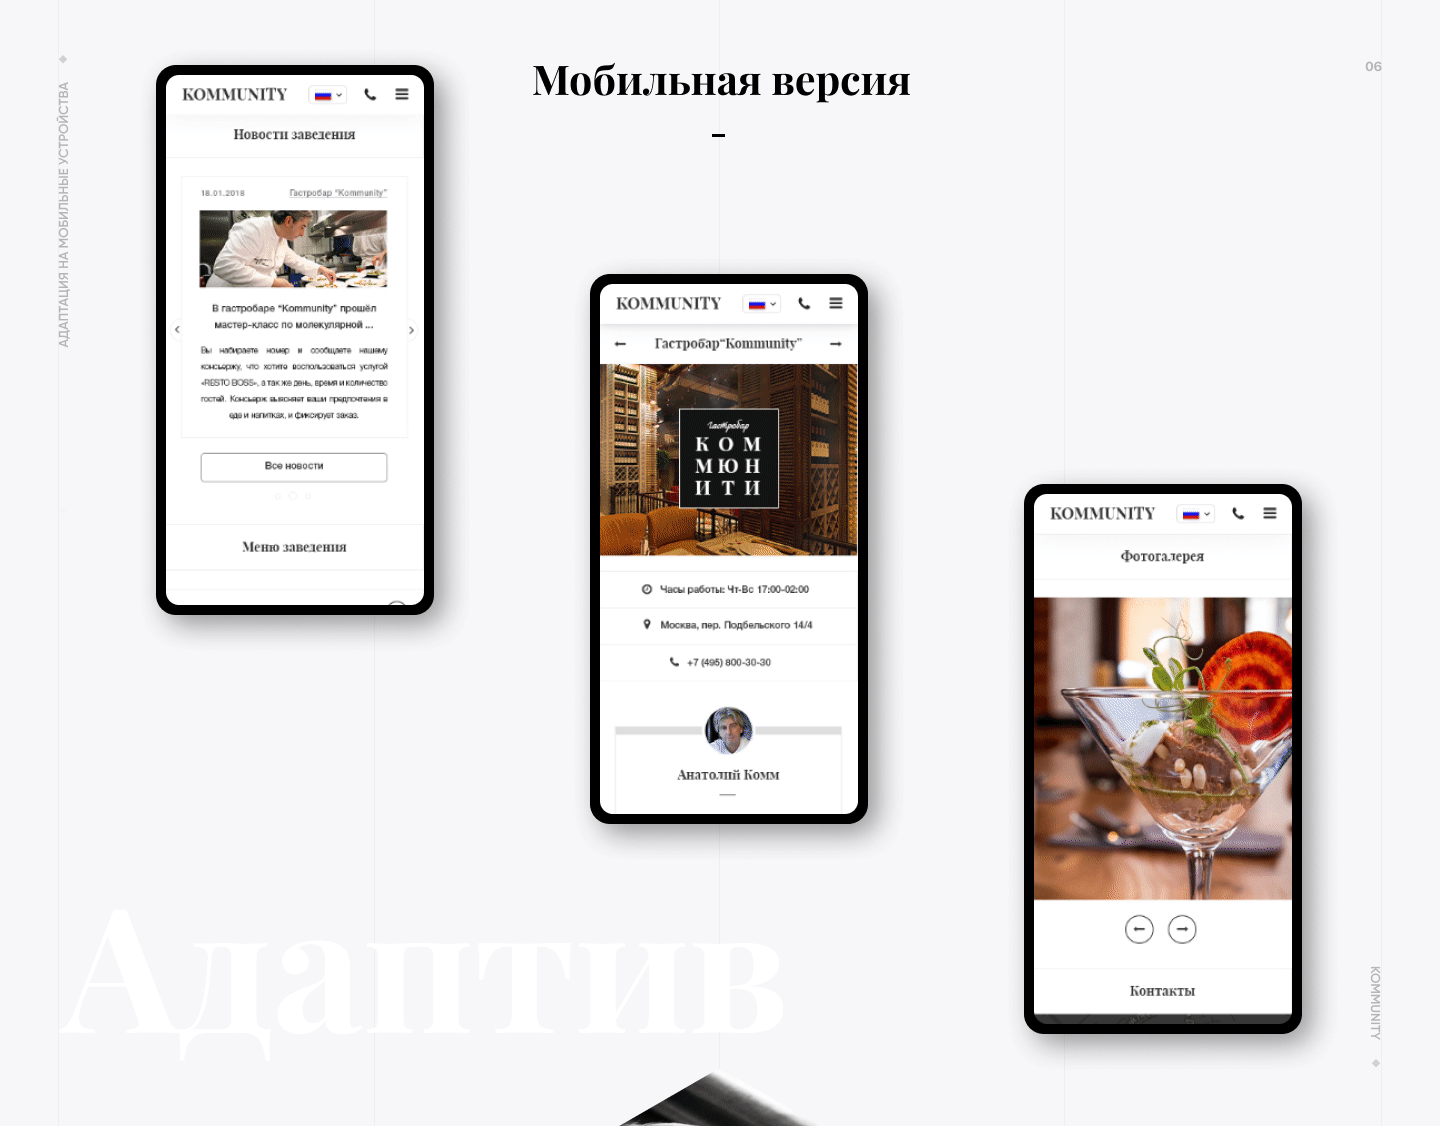 Ресторанный бренд «Kommunity» Анатолия Комма